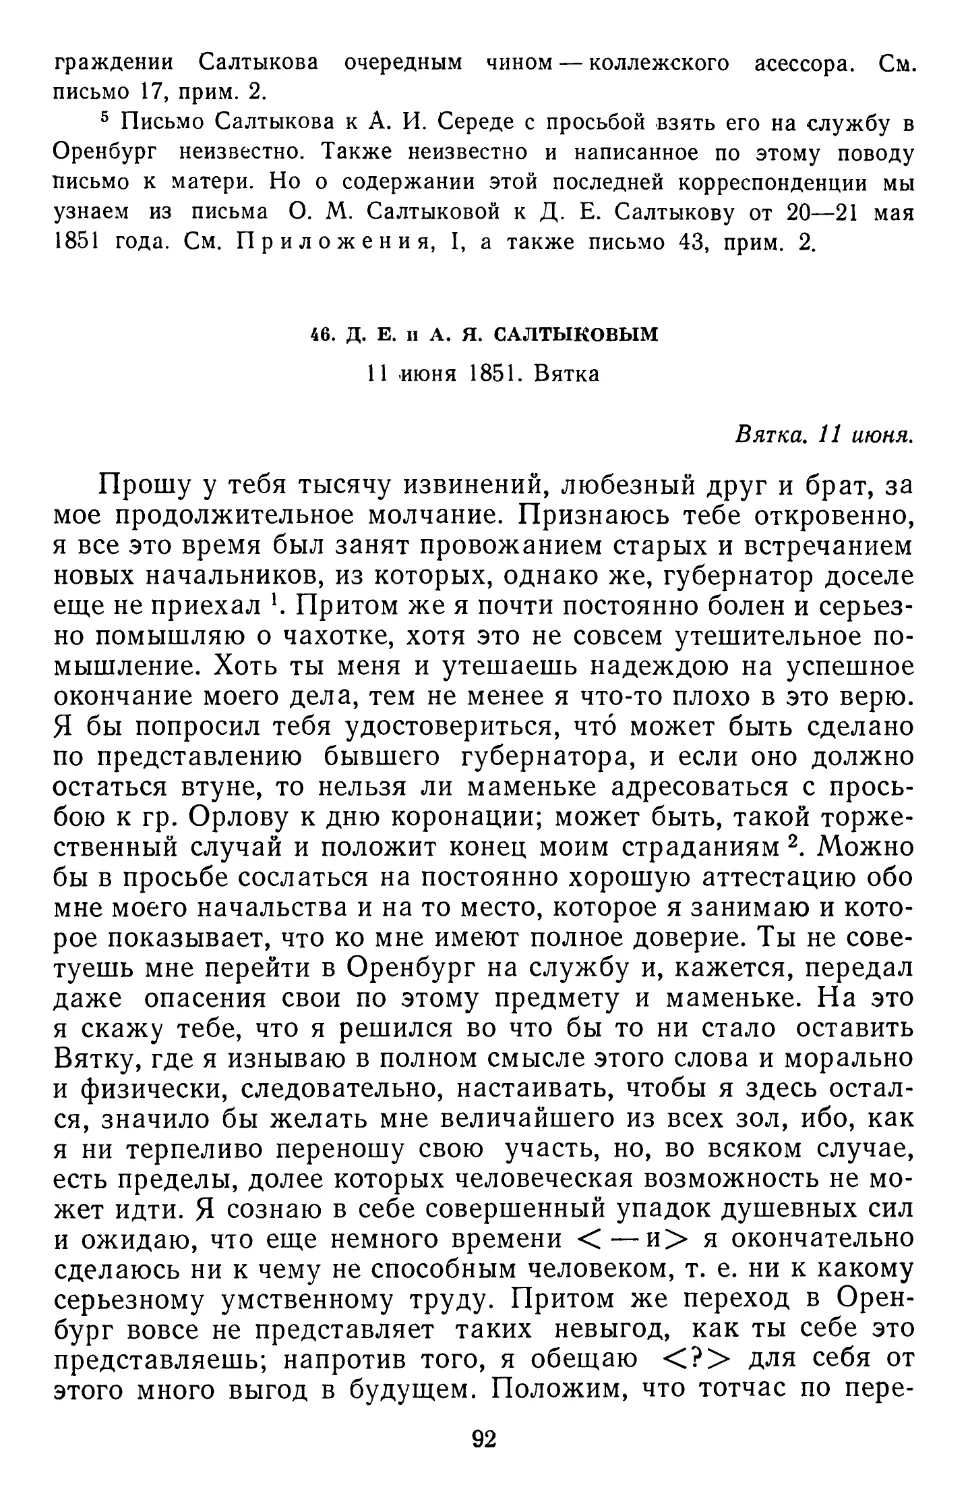 46.Д. Е. и А. Я. Салтыковым. 11 июня 1851. Вятка